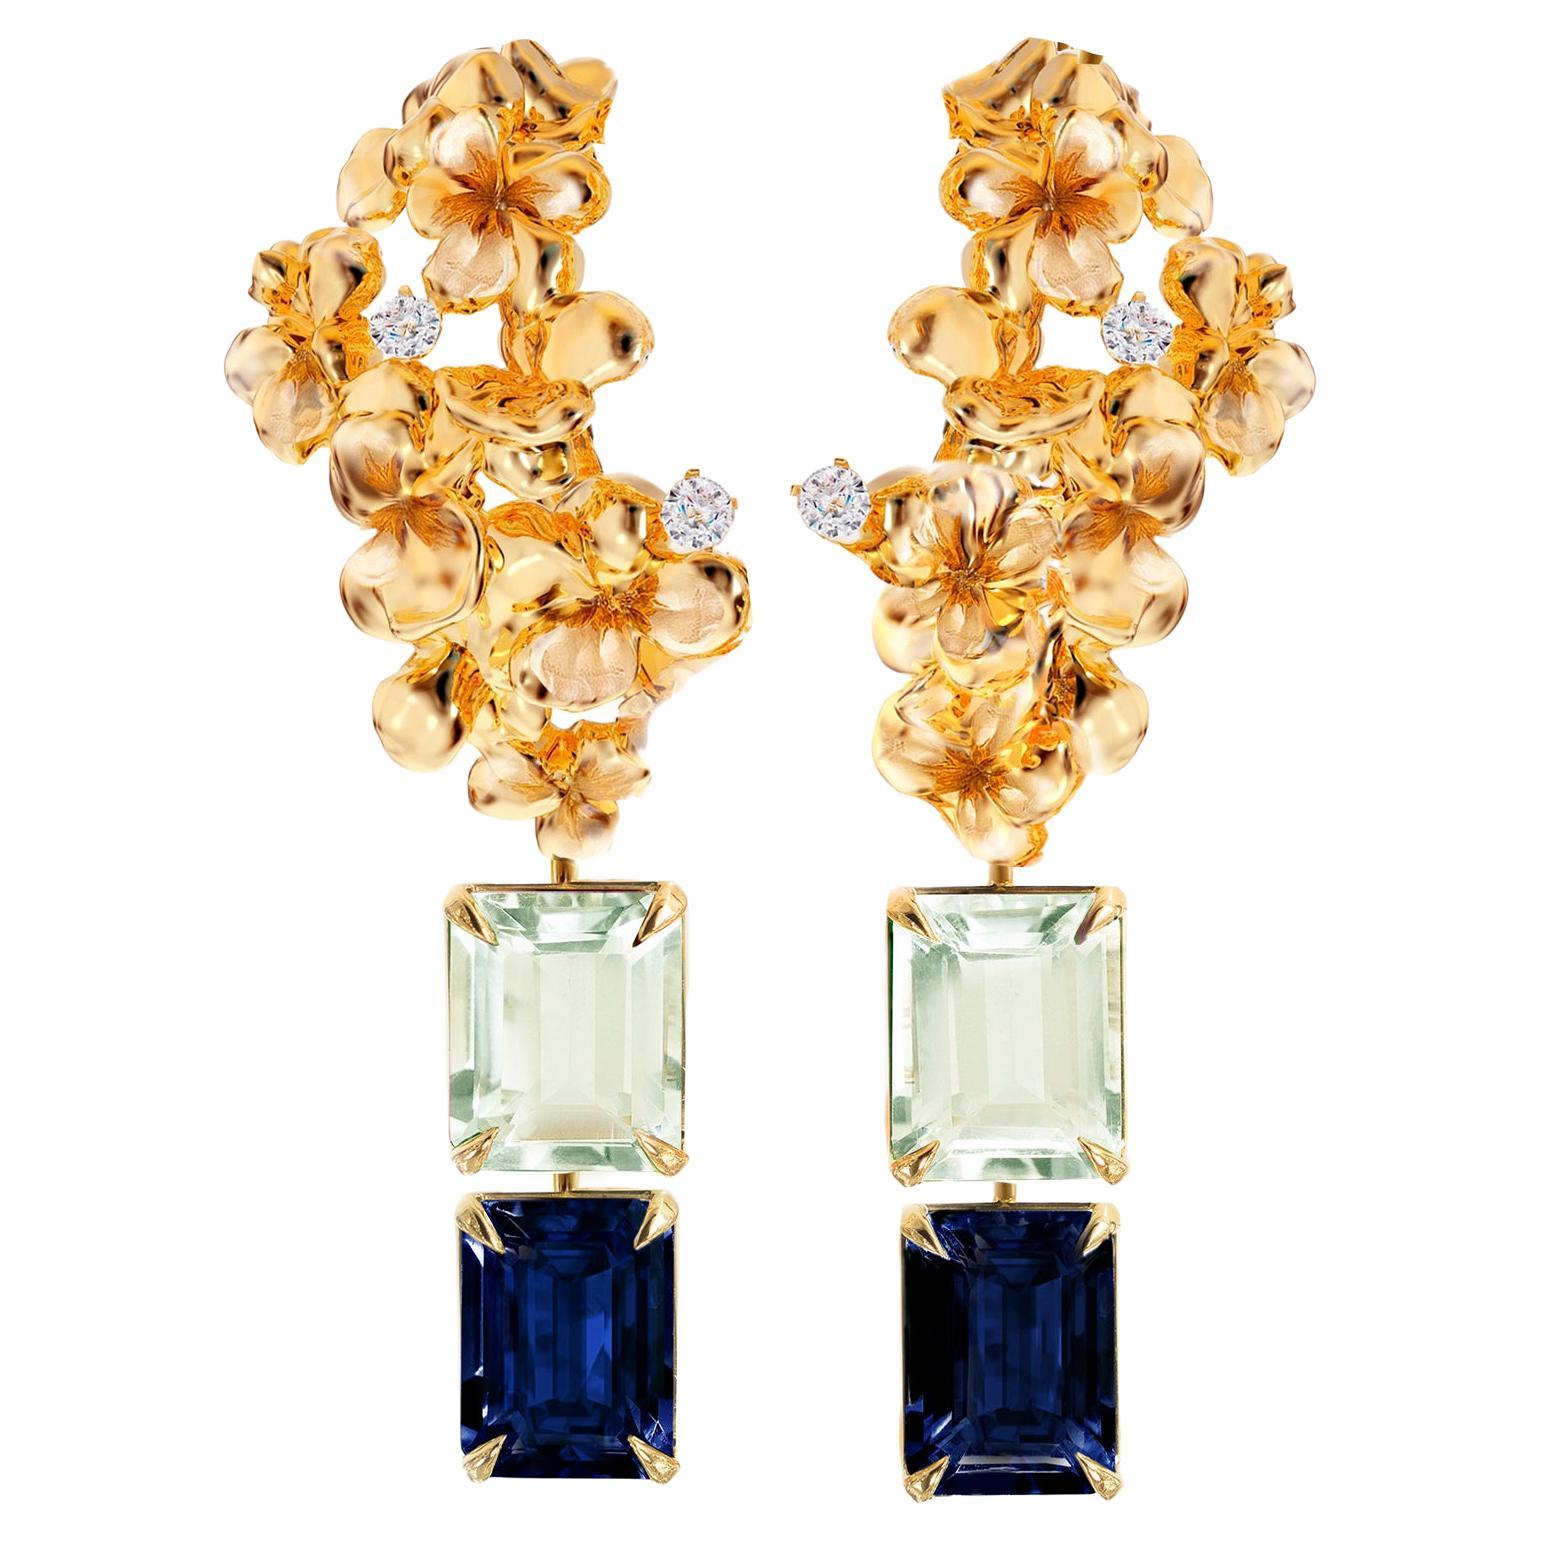 Eighteen Karat Yellow Gold Dangle Earrings with Diamonds and Sapphires